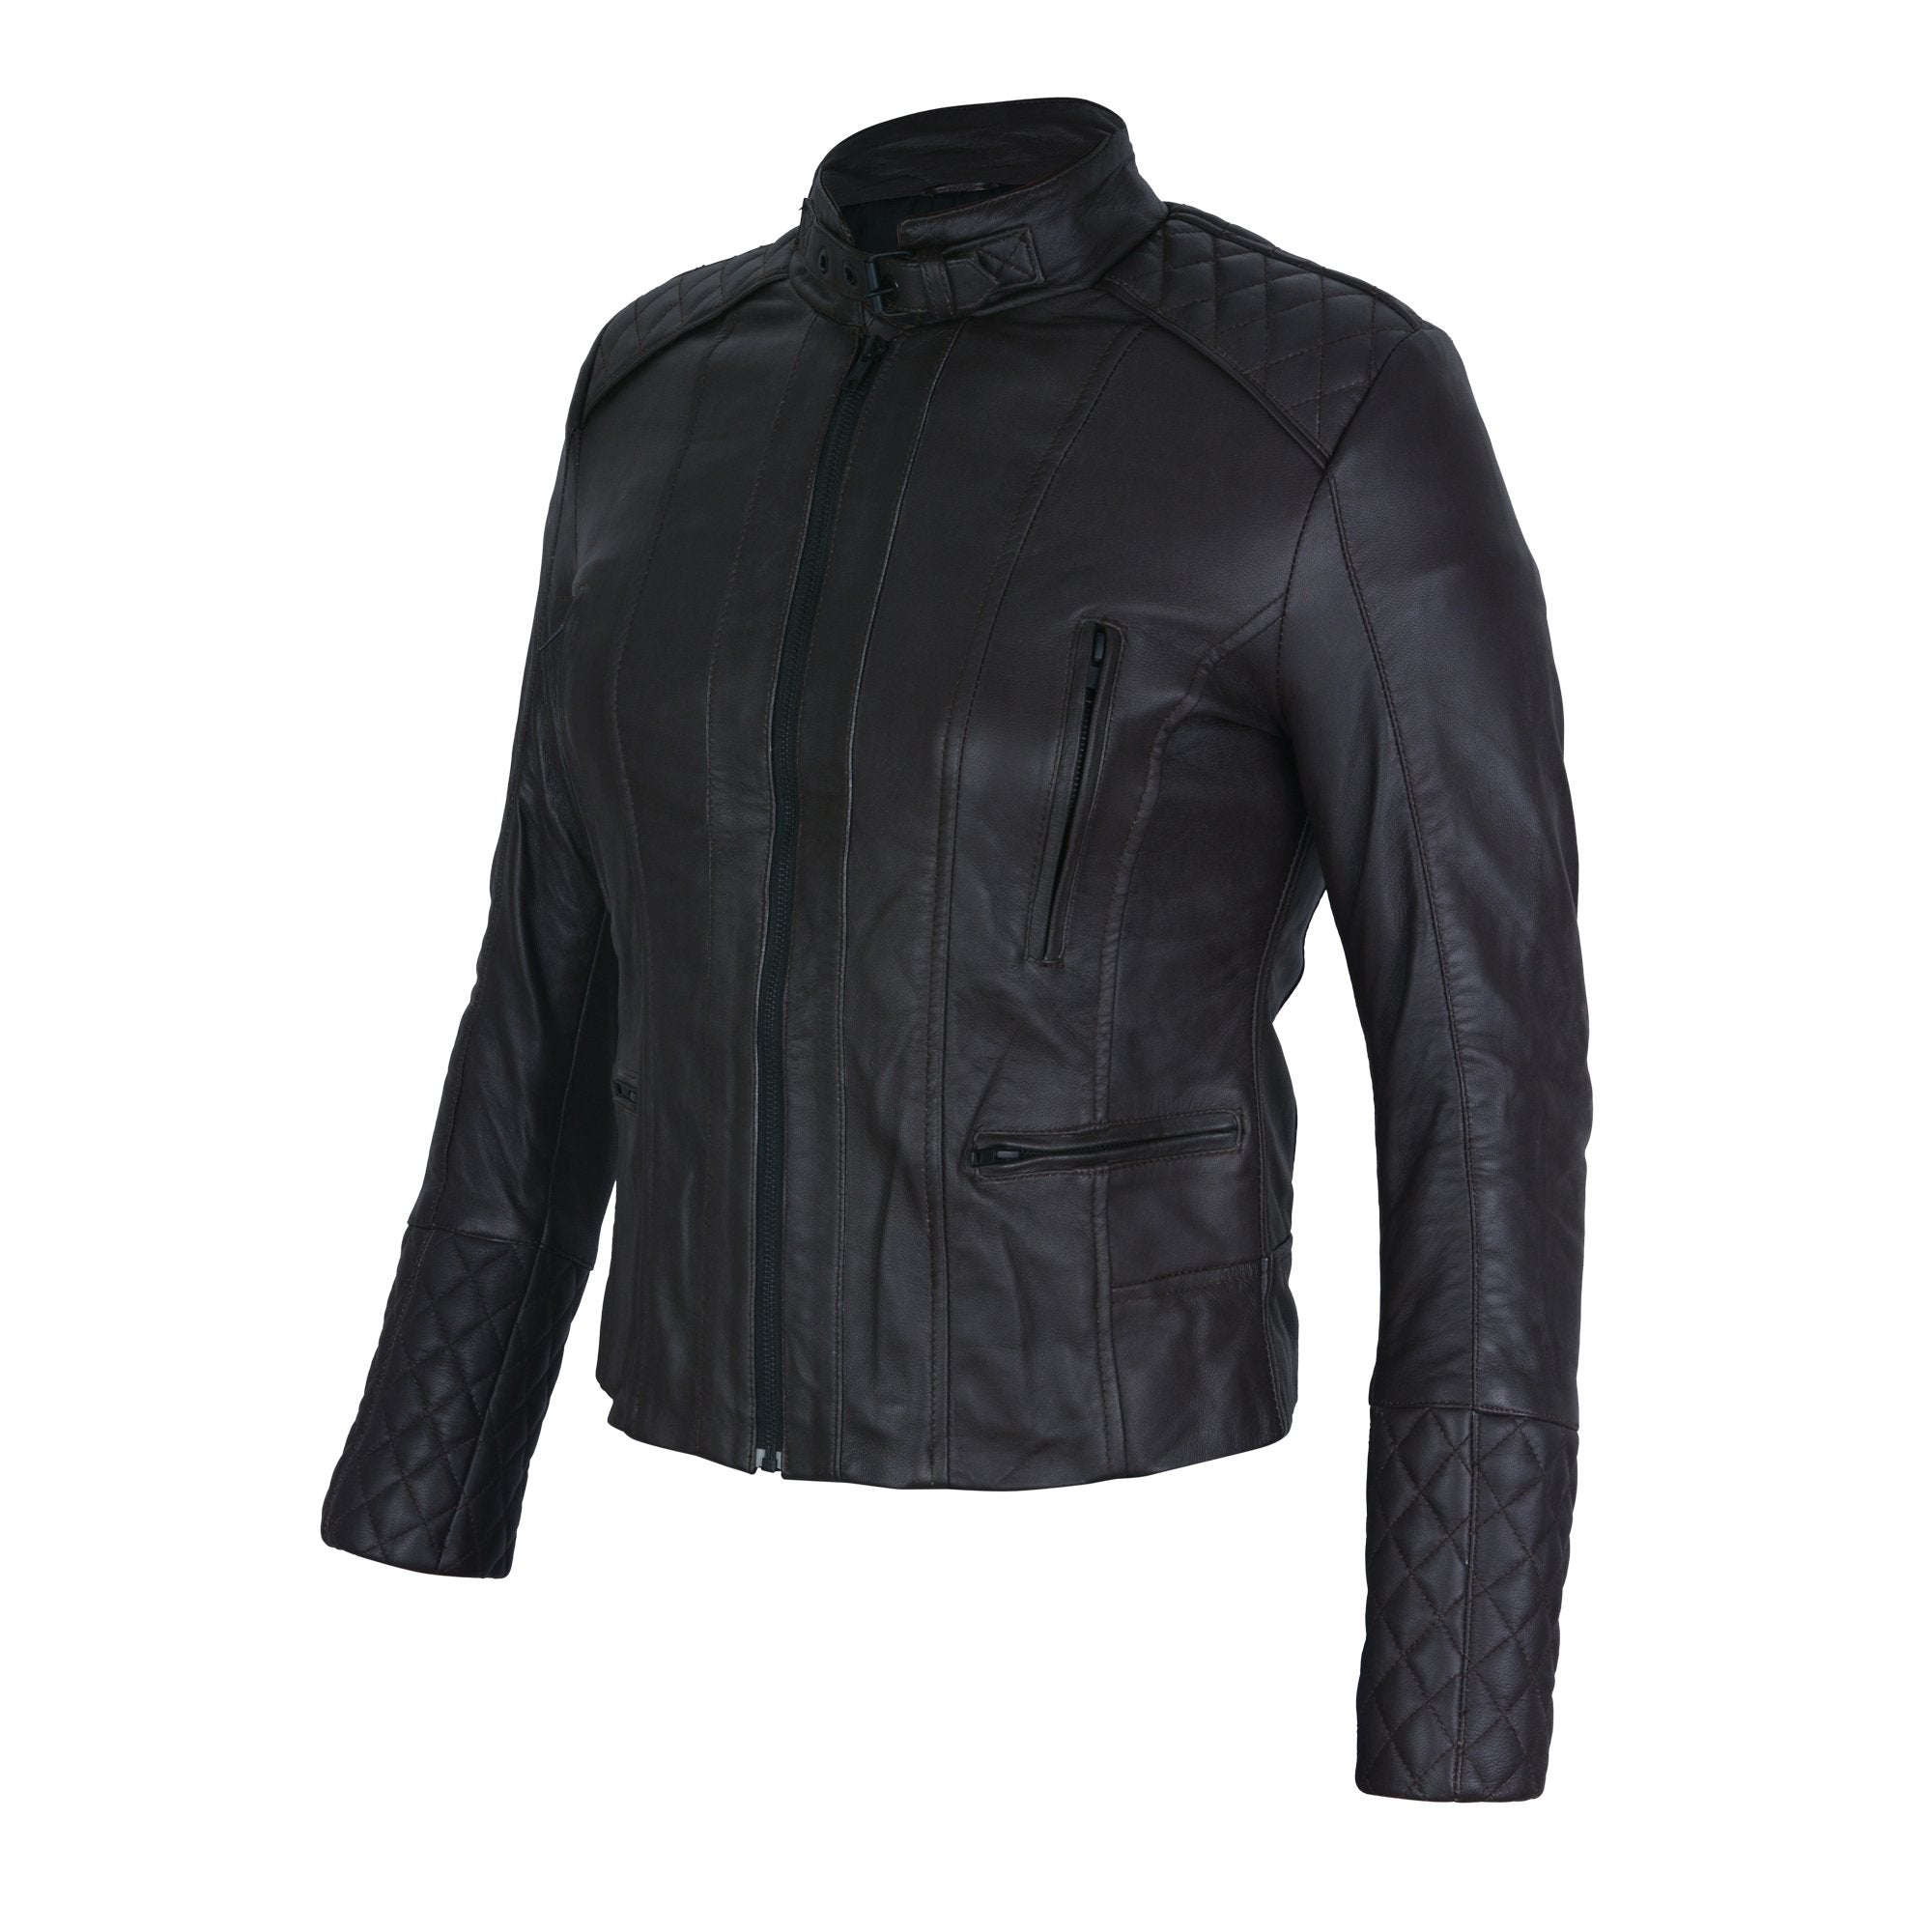 Women Sheepskin Quilted Black Genuine Leather Jacket